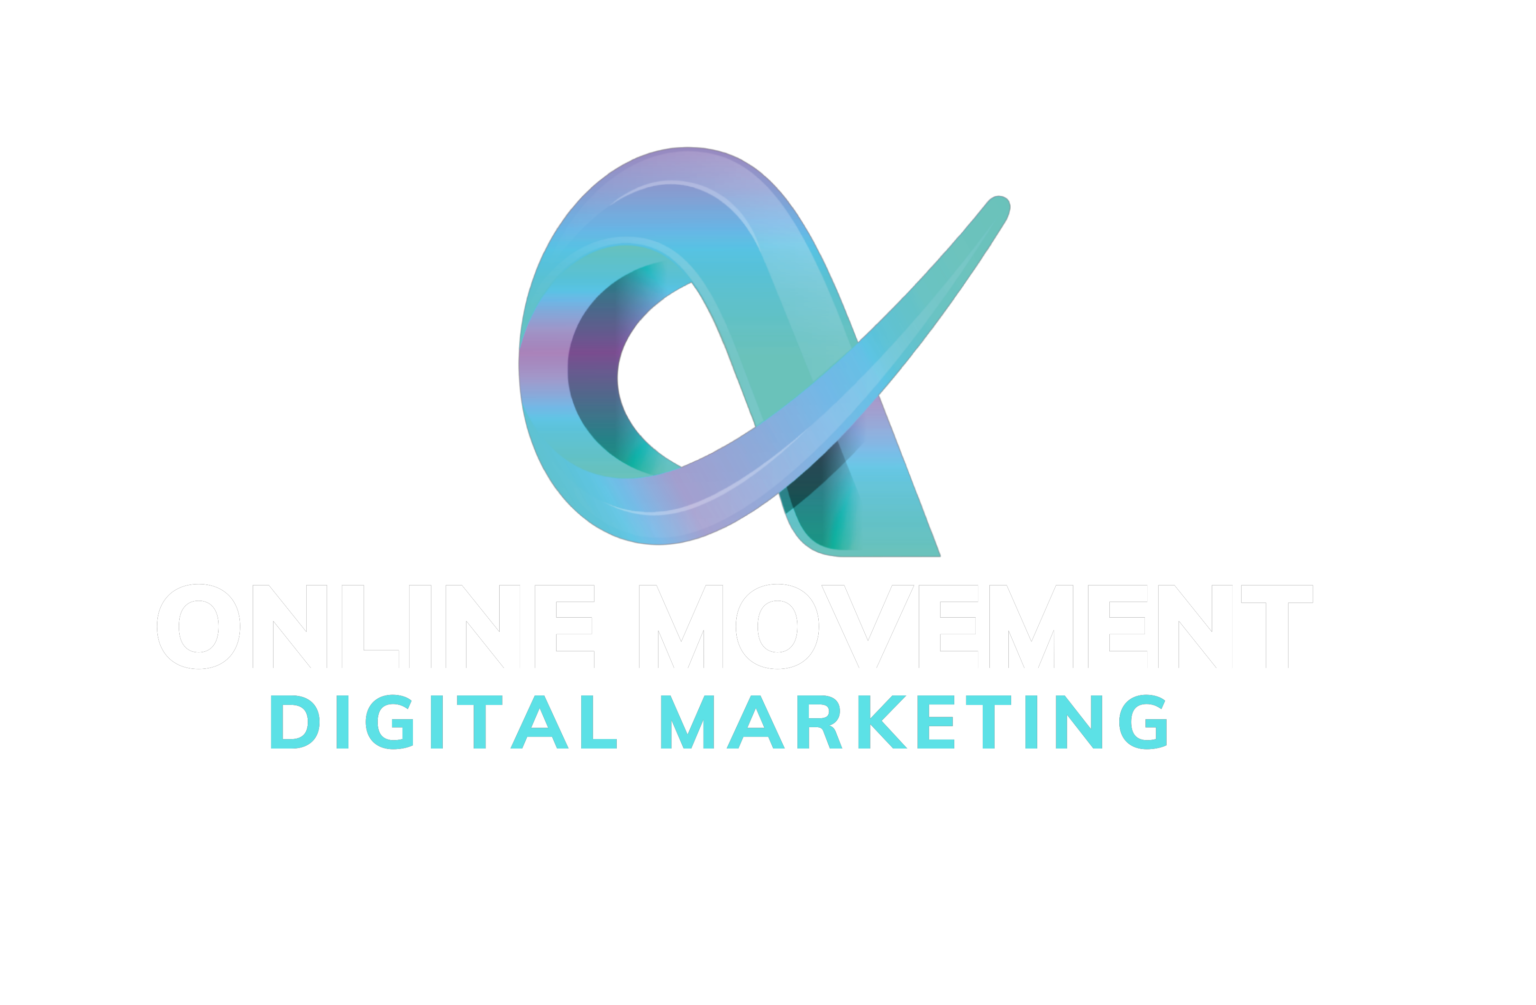 Online Movement Digital Marketing